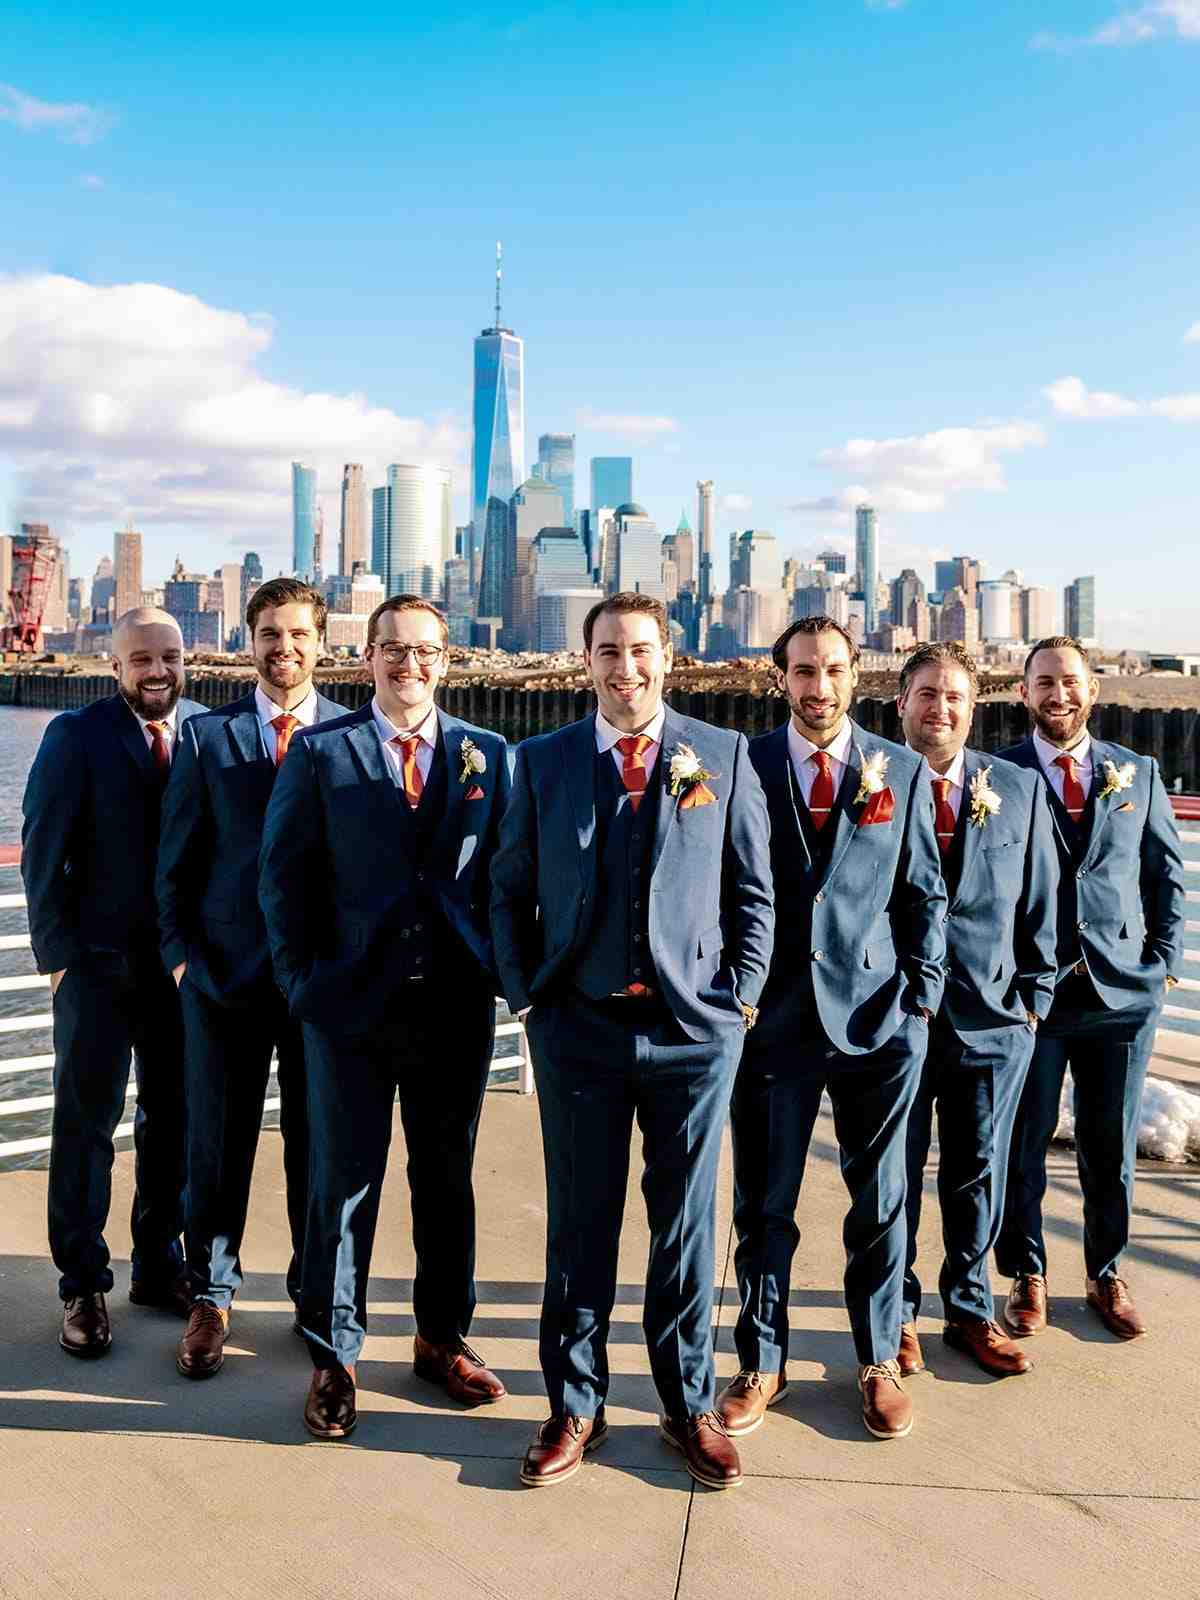 Groomsmen pose together in semi formal wedding attire